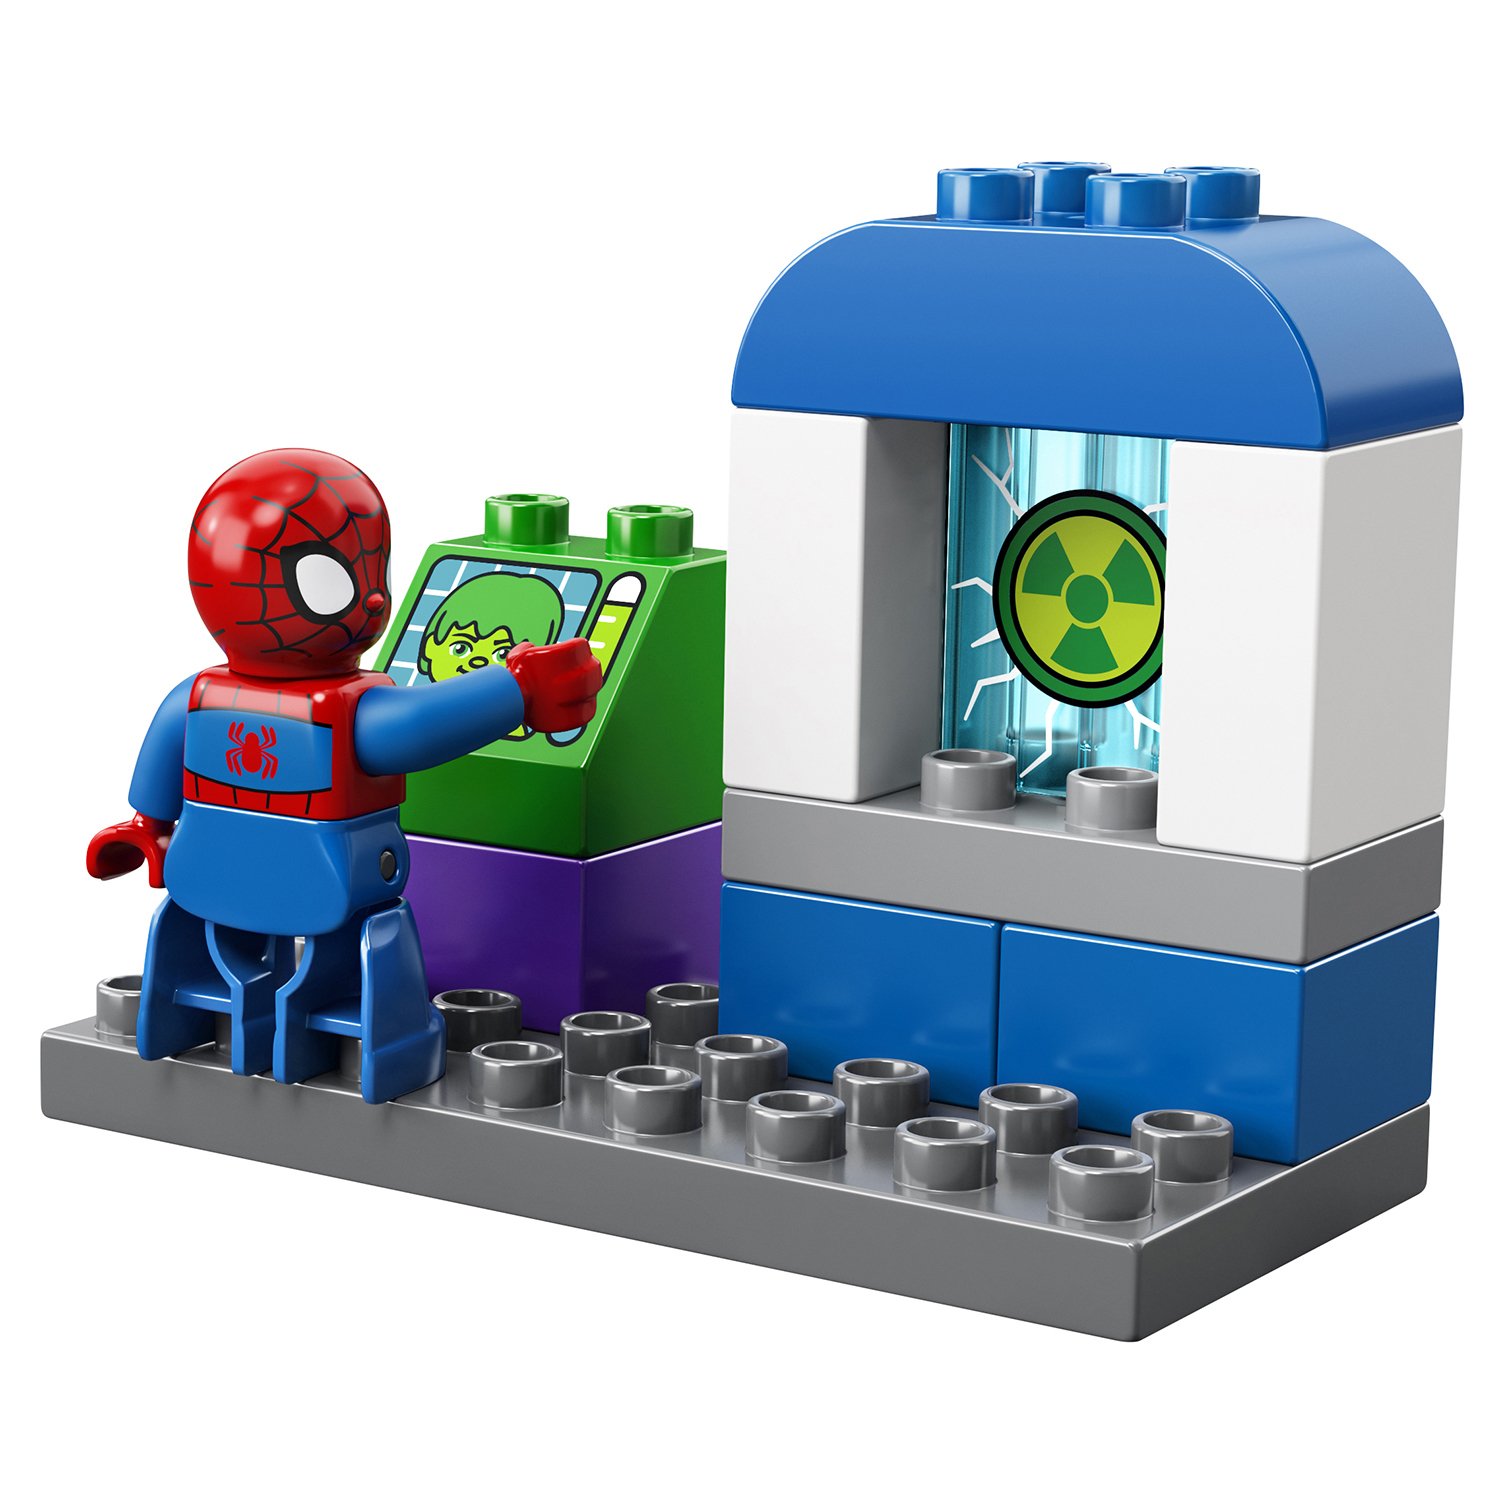 Lego Duplo 10876 Приключения Человека-паука и Халка